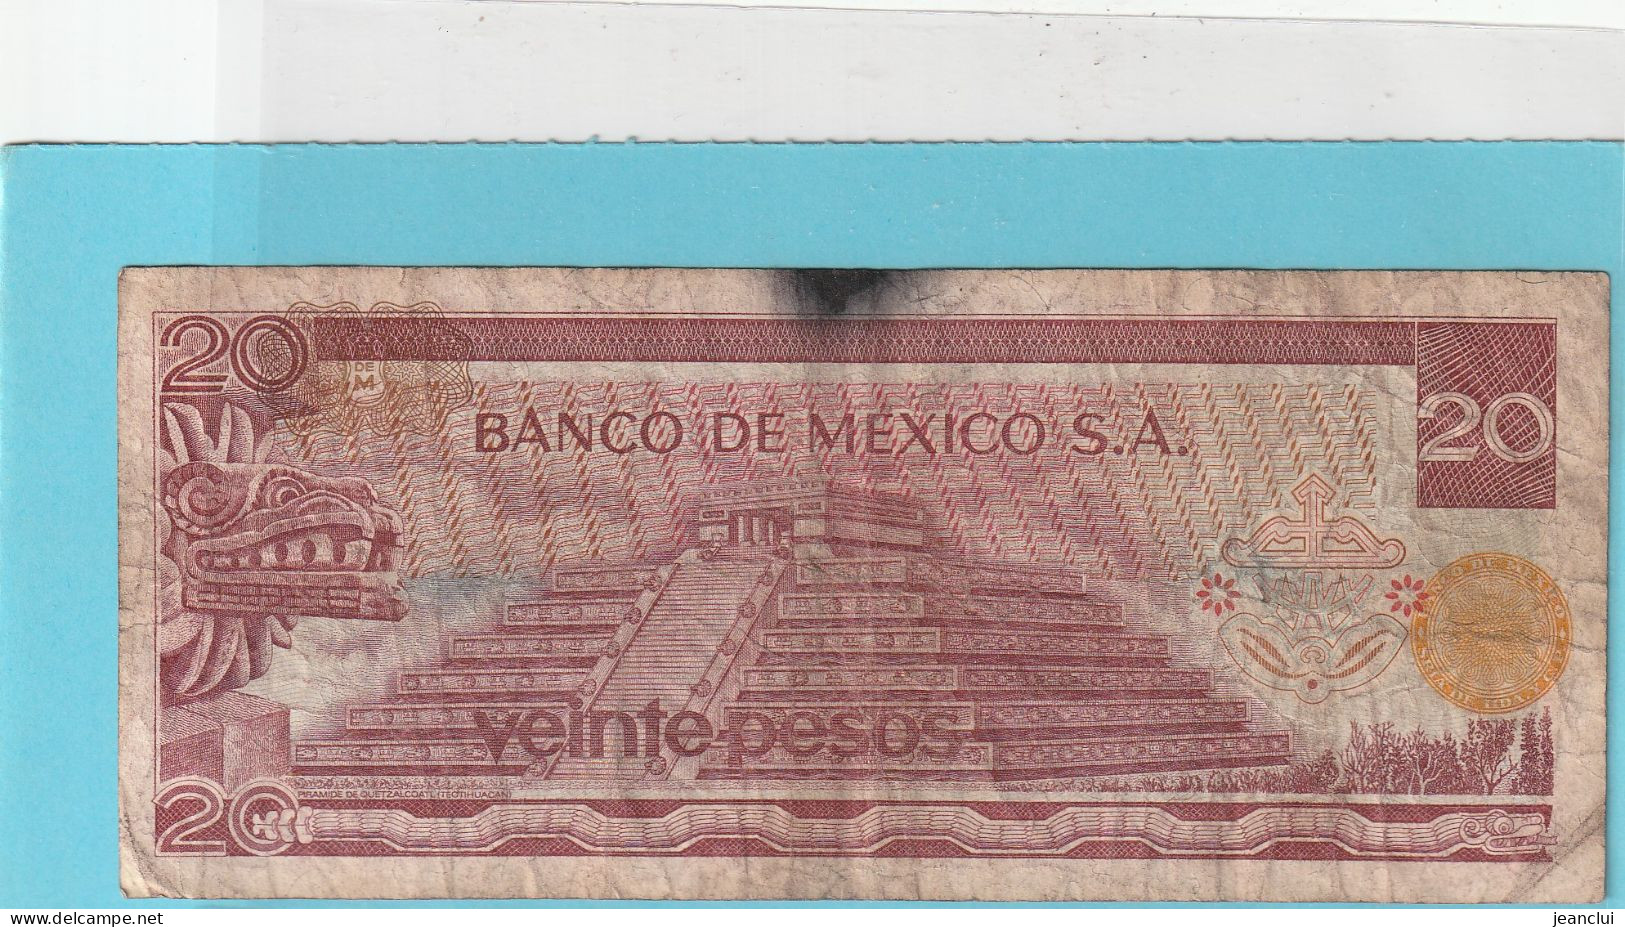 EL BANCO DE MEXICO S.A.   .  20 PESOS  .  18-7-1973  .  N°  L 8388428 .  2 SCANNES  .  BILLET TRES USITE - Mexique